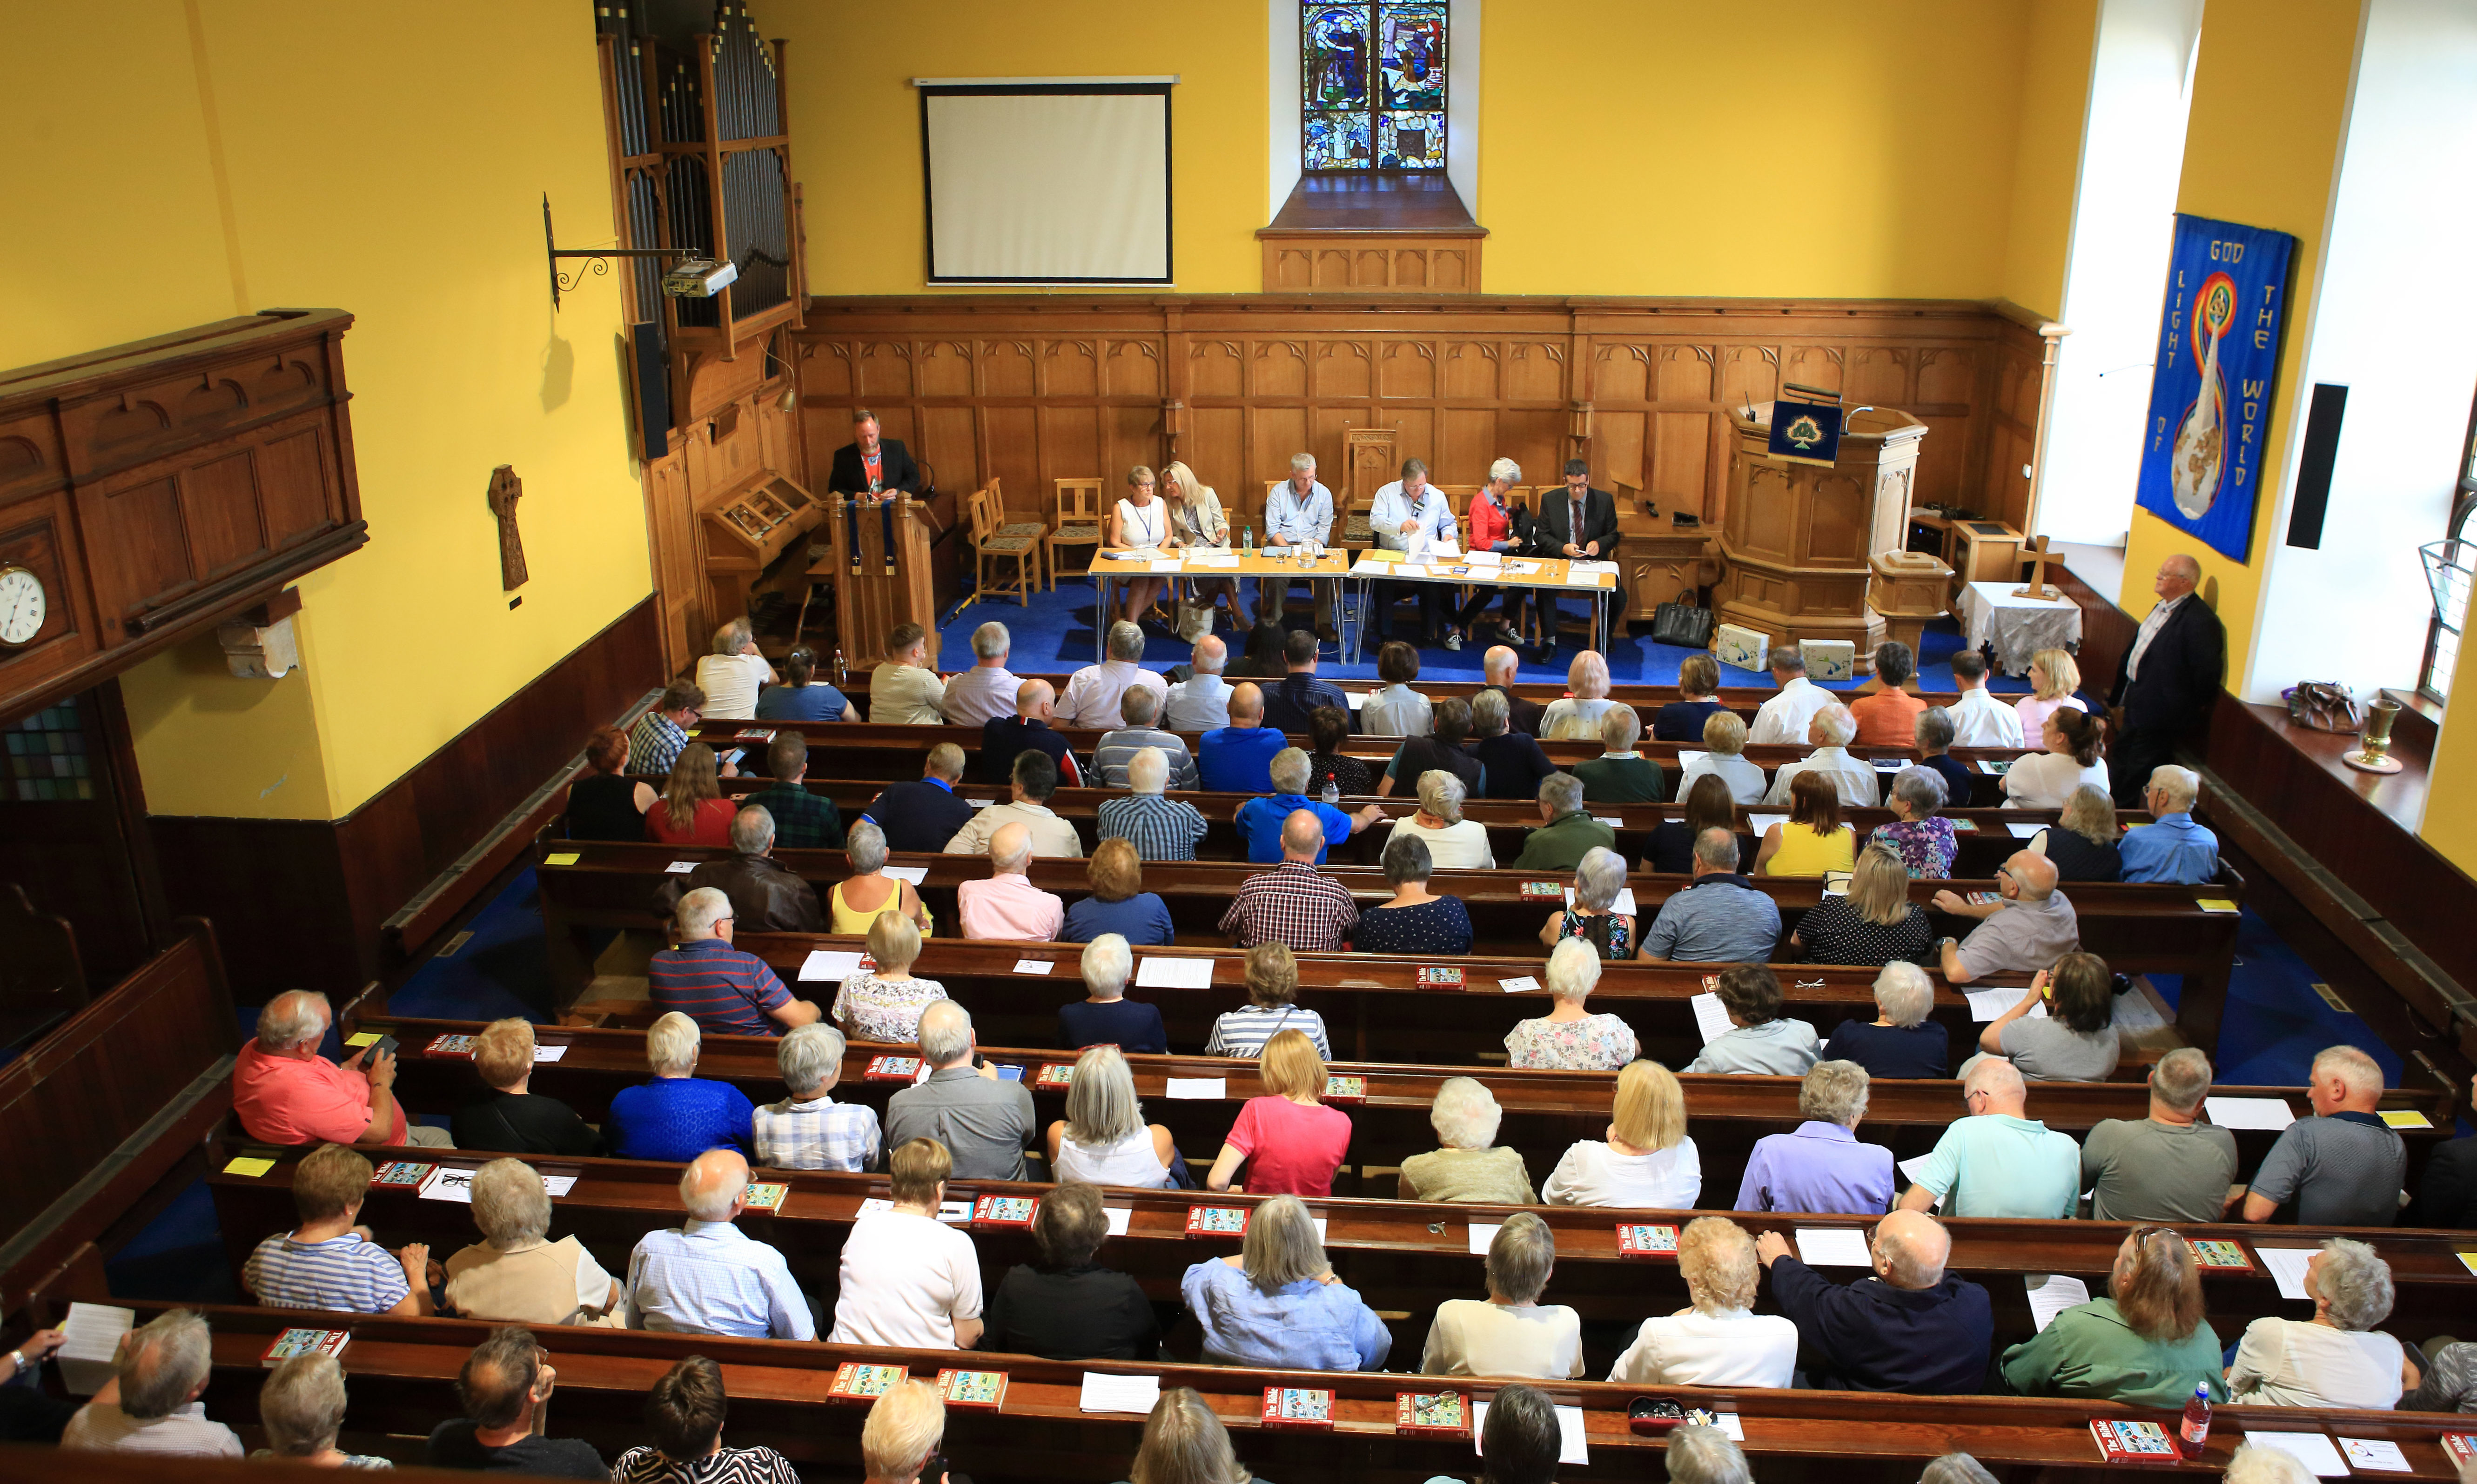 Hundreds crammed into Dunbarney Parish Church to quiz health bosses.